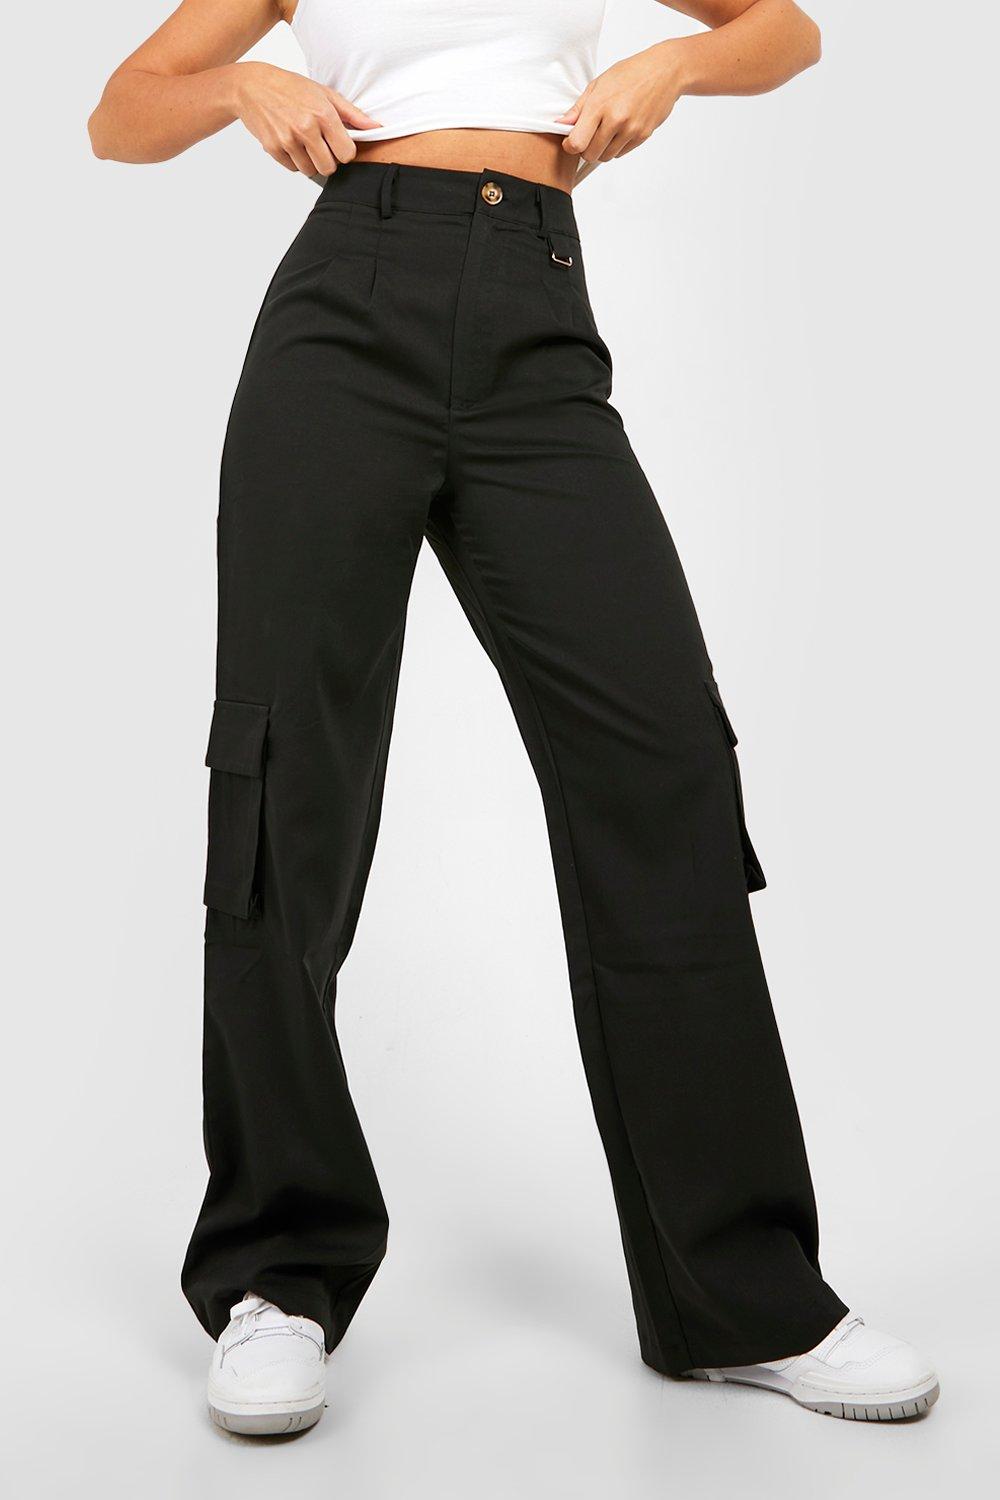 https://media.boohoo.com/i/boohoo/gzz41613_black_xl_3/female-black-high-waisted-tailored-cargo-trousers